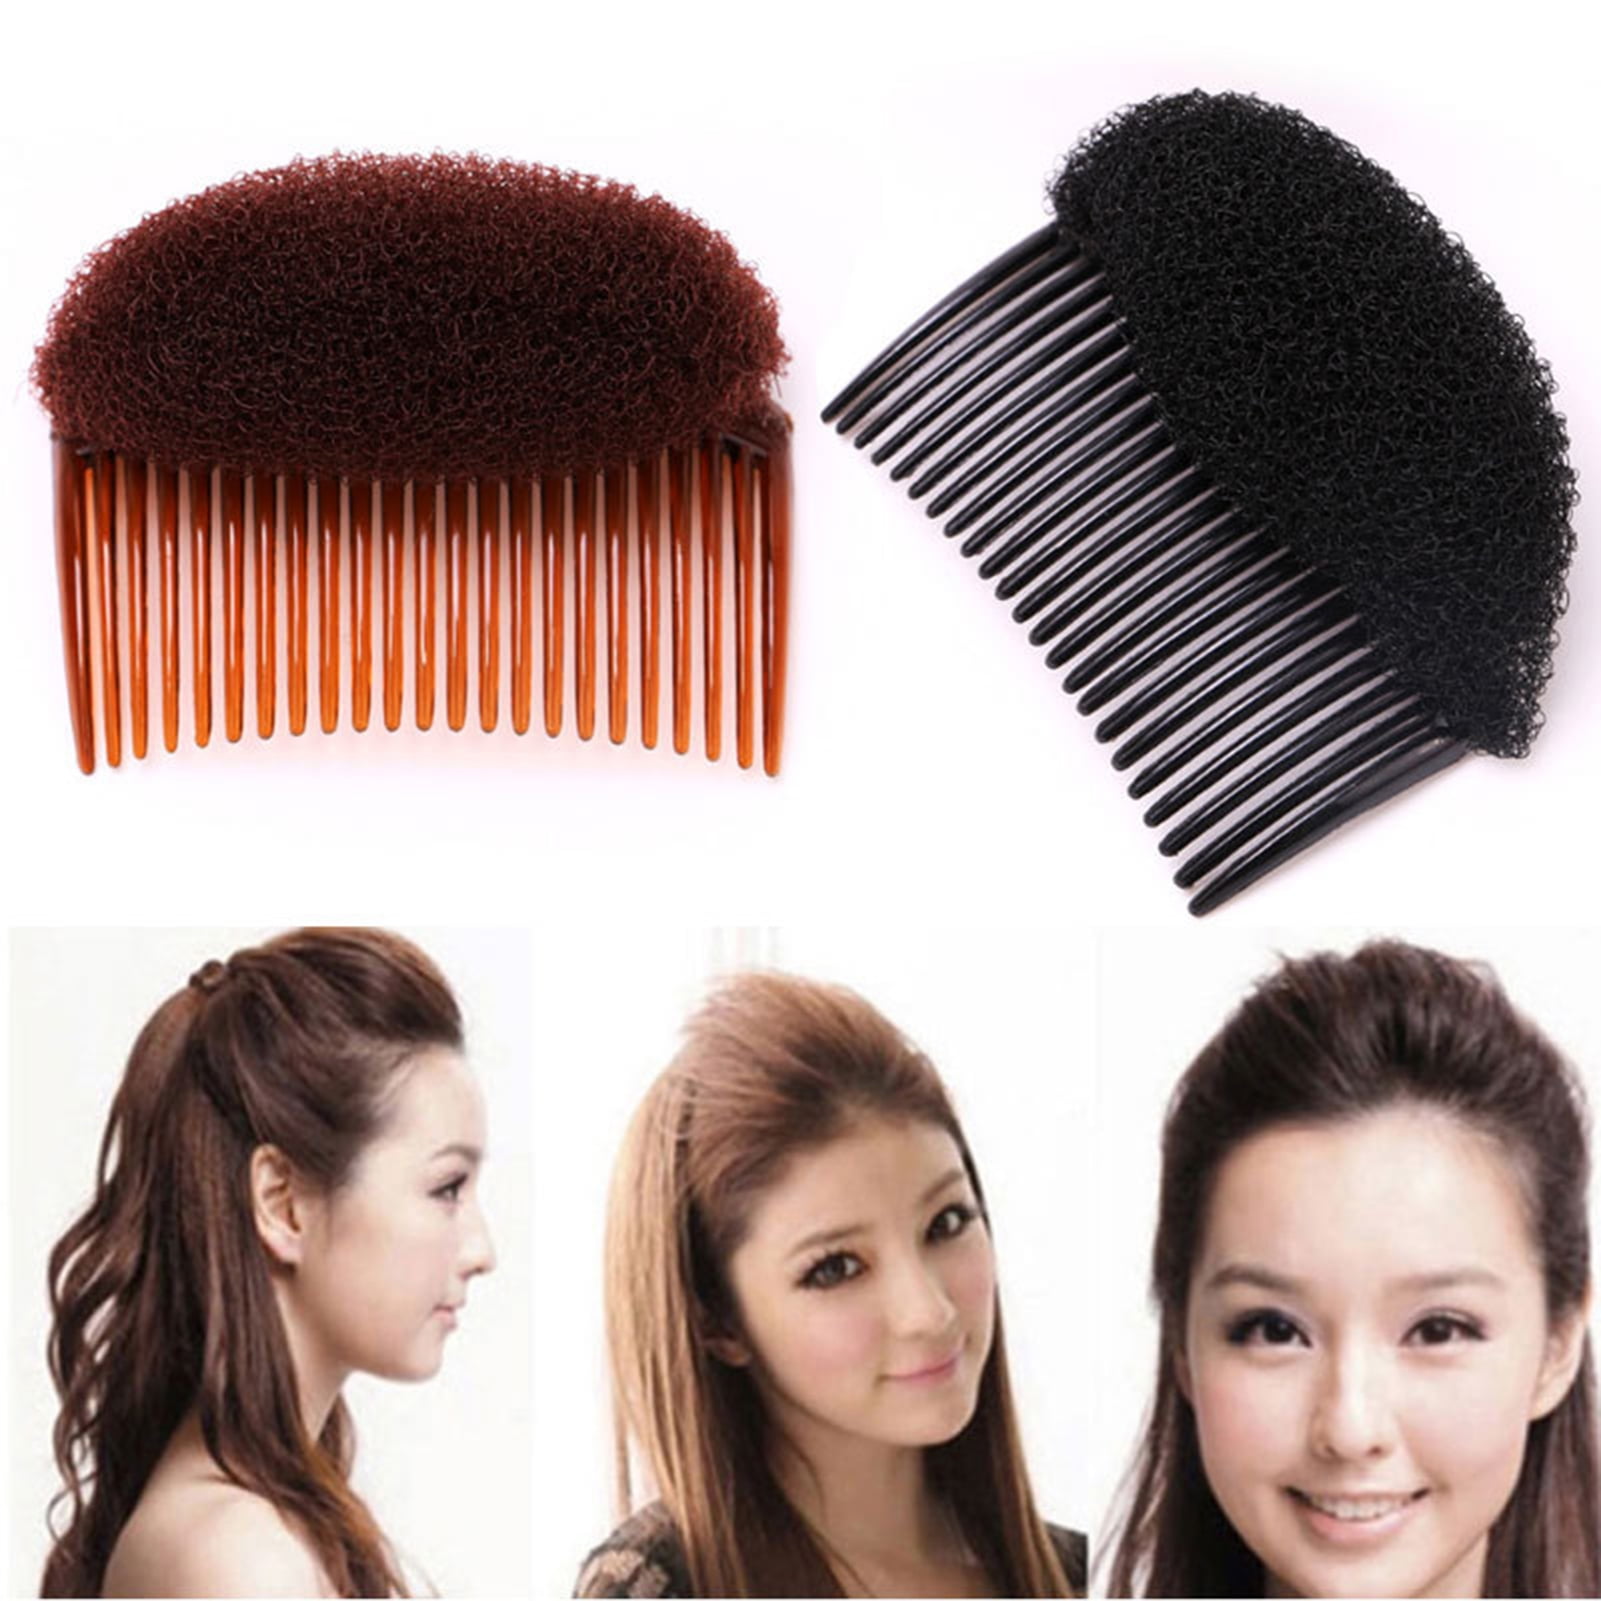 Dengjunhu 6Pcs Women Lady Girl Hair Styling Clip Stick Bun Maker Braid Tool  Hair Accessories 